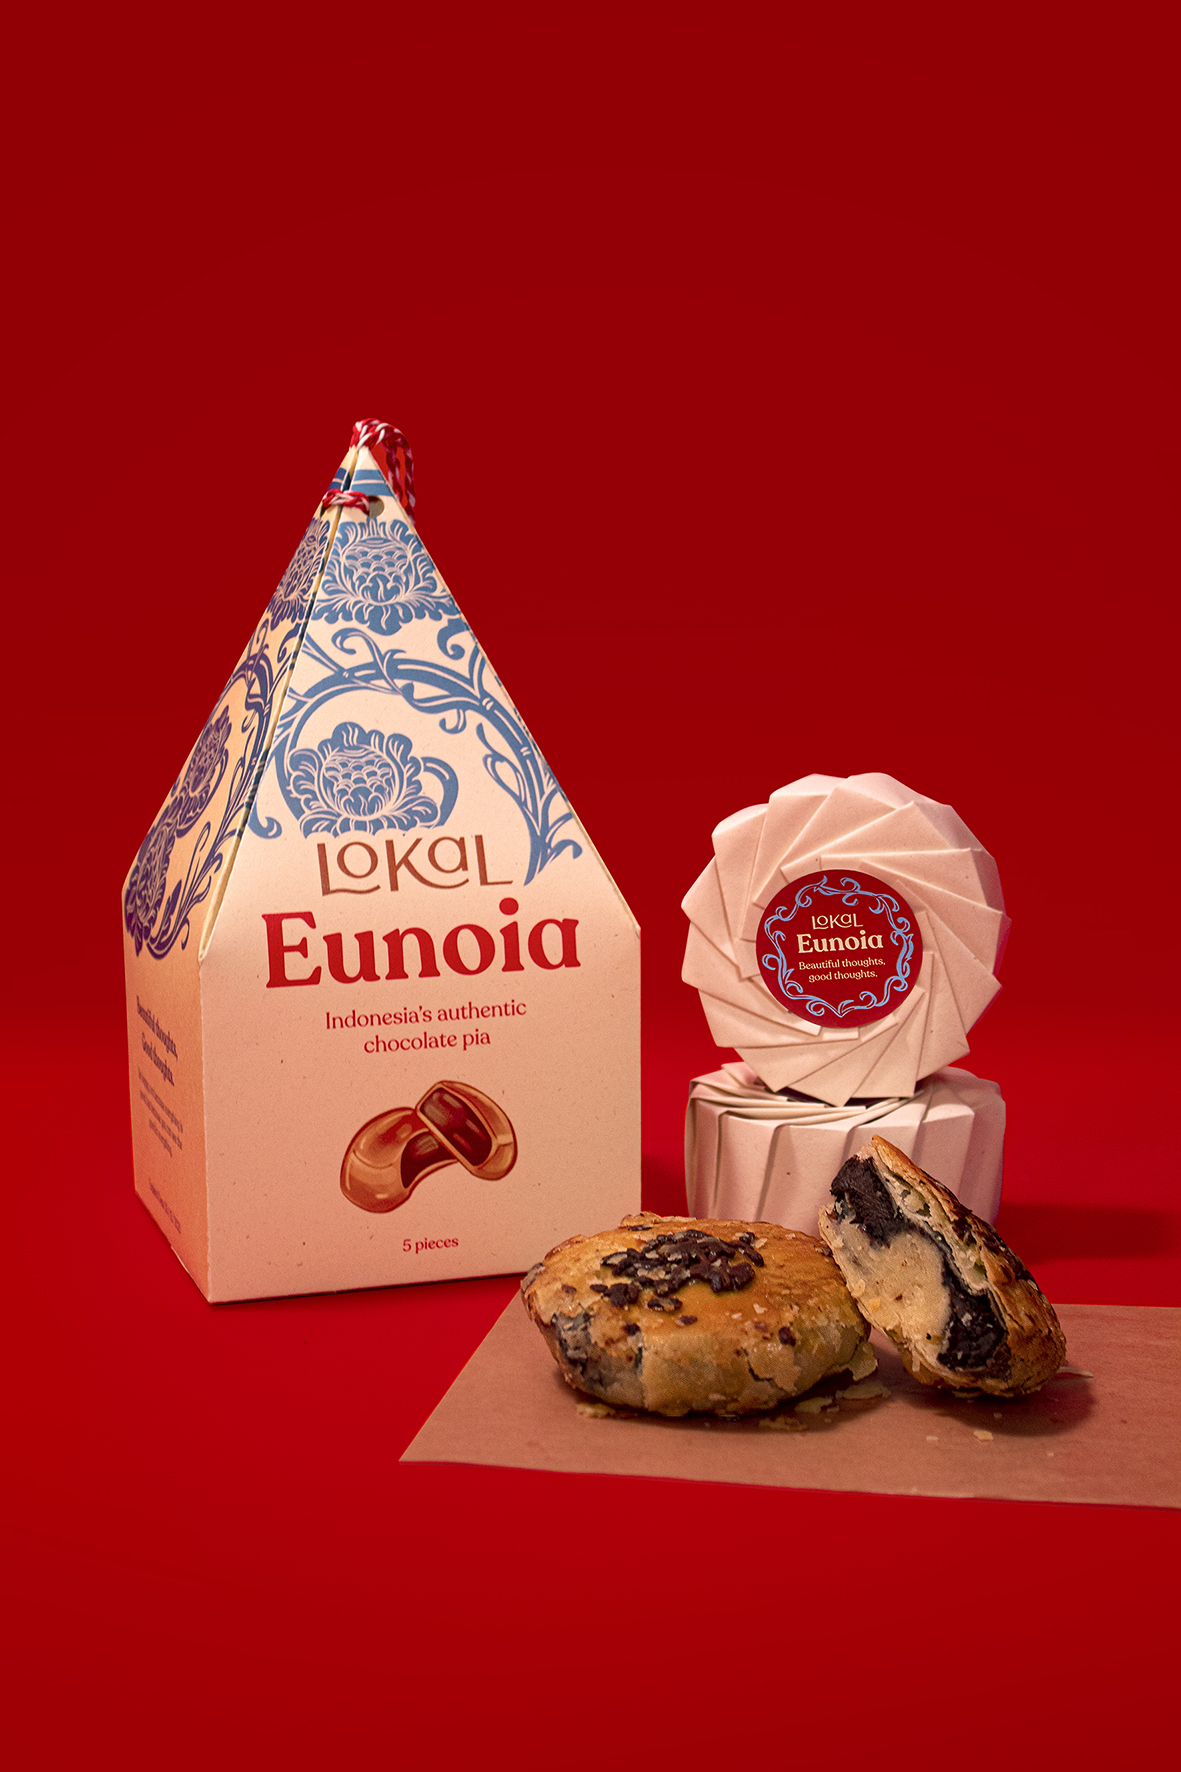 Eunoia Packaging Design Concept Created by Student Nadia Benita Basilia